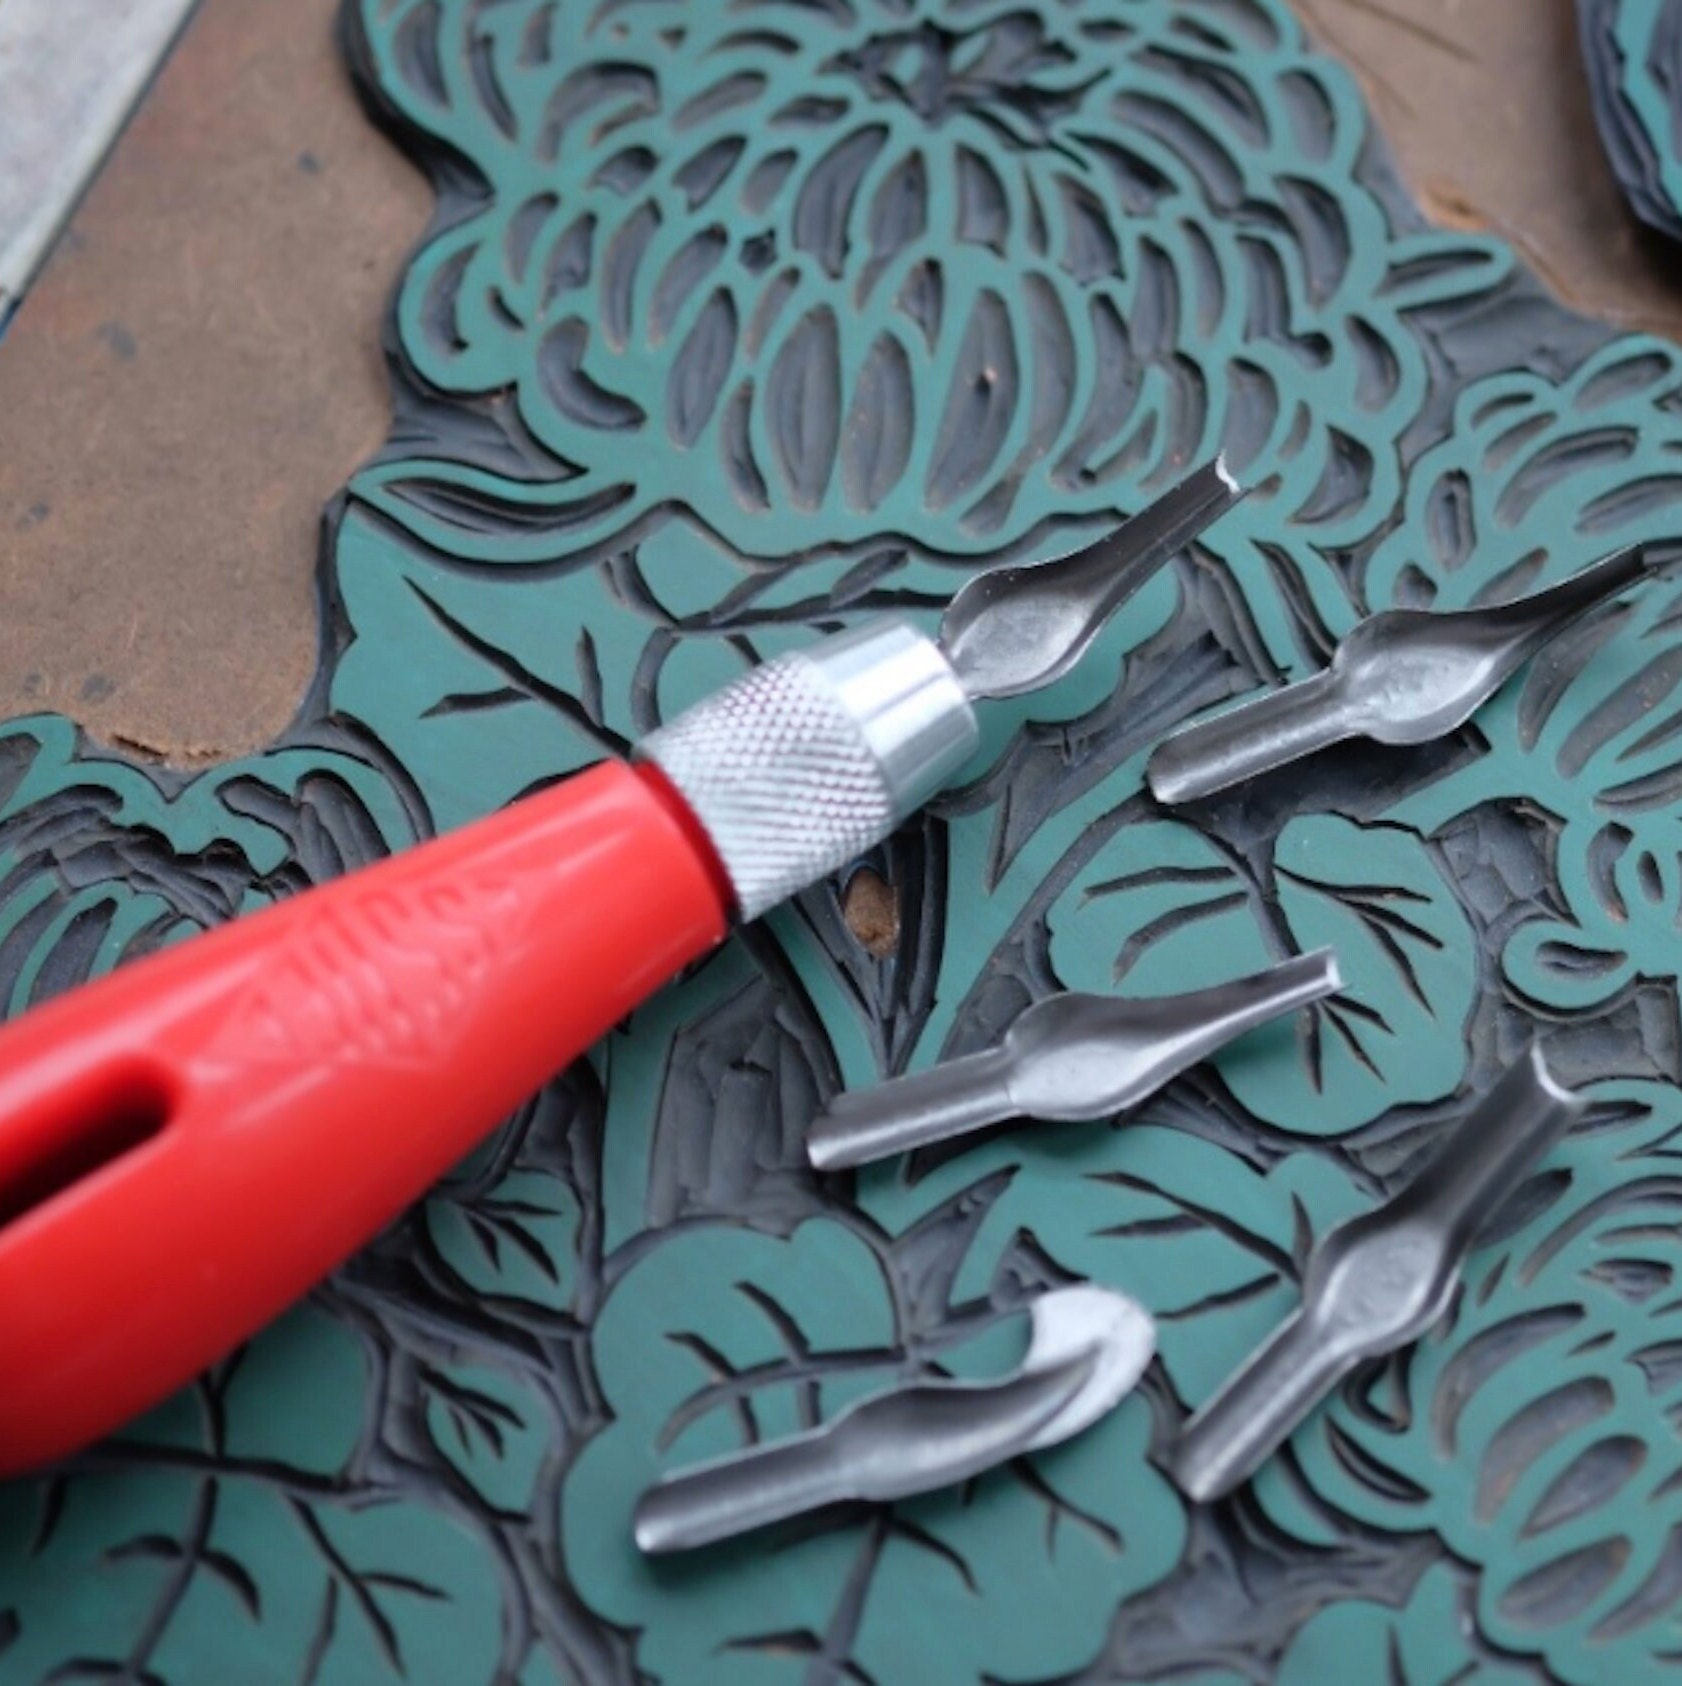 Linoleum Cutter Set, DIY Linocut Carving Tool Woodworking Cutting Sculpting  Multiple Knife Art Printmaking 10 Blades Block Printing Stamp Greeting